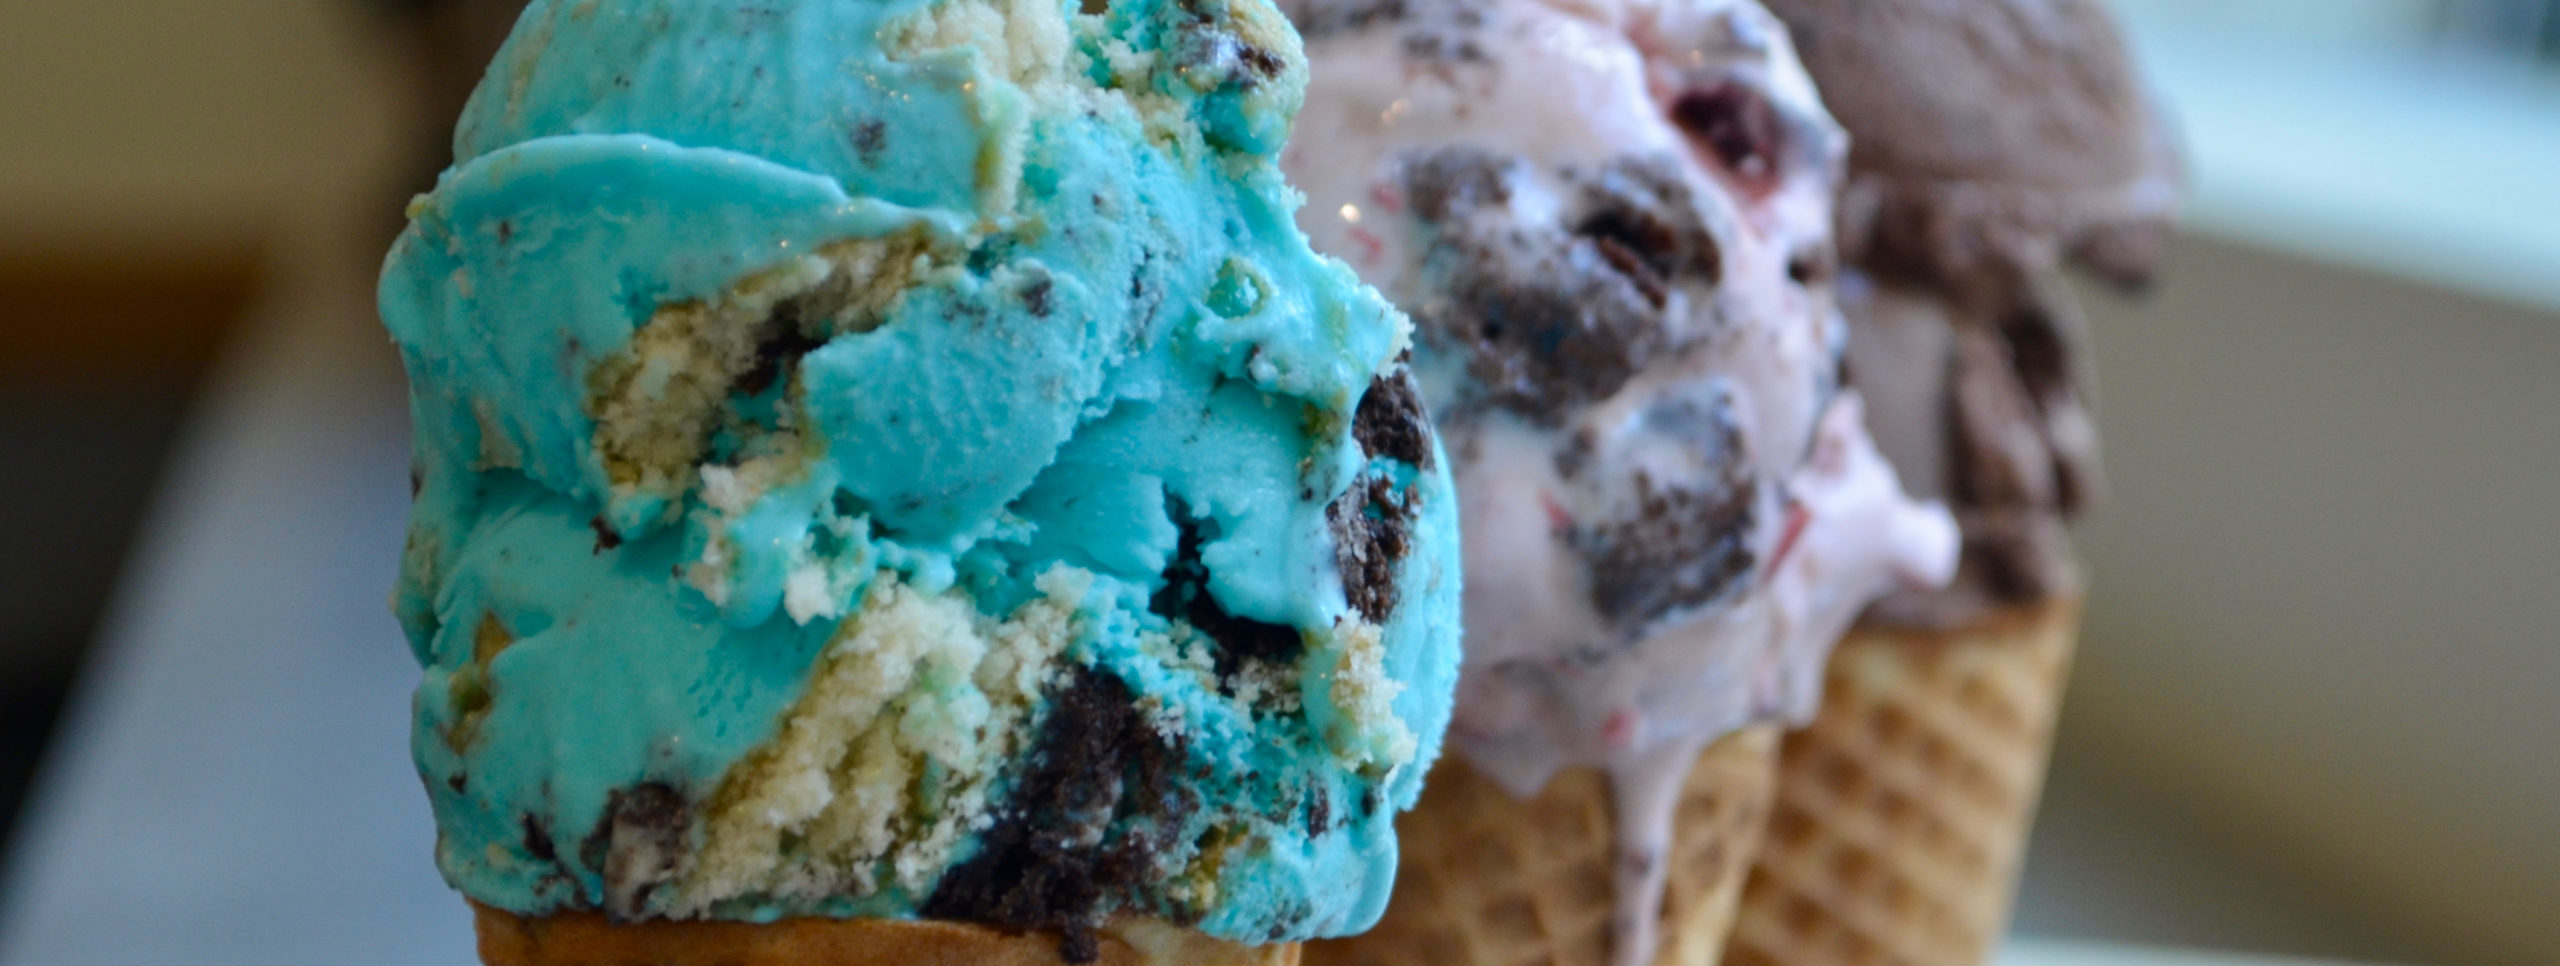 Three flavors of ice cream in three ccones.